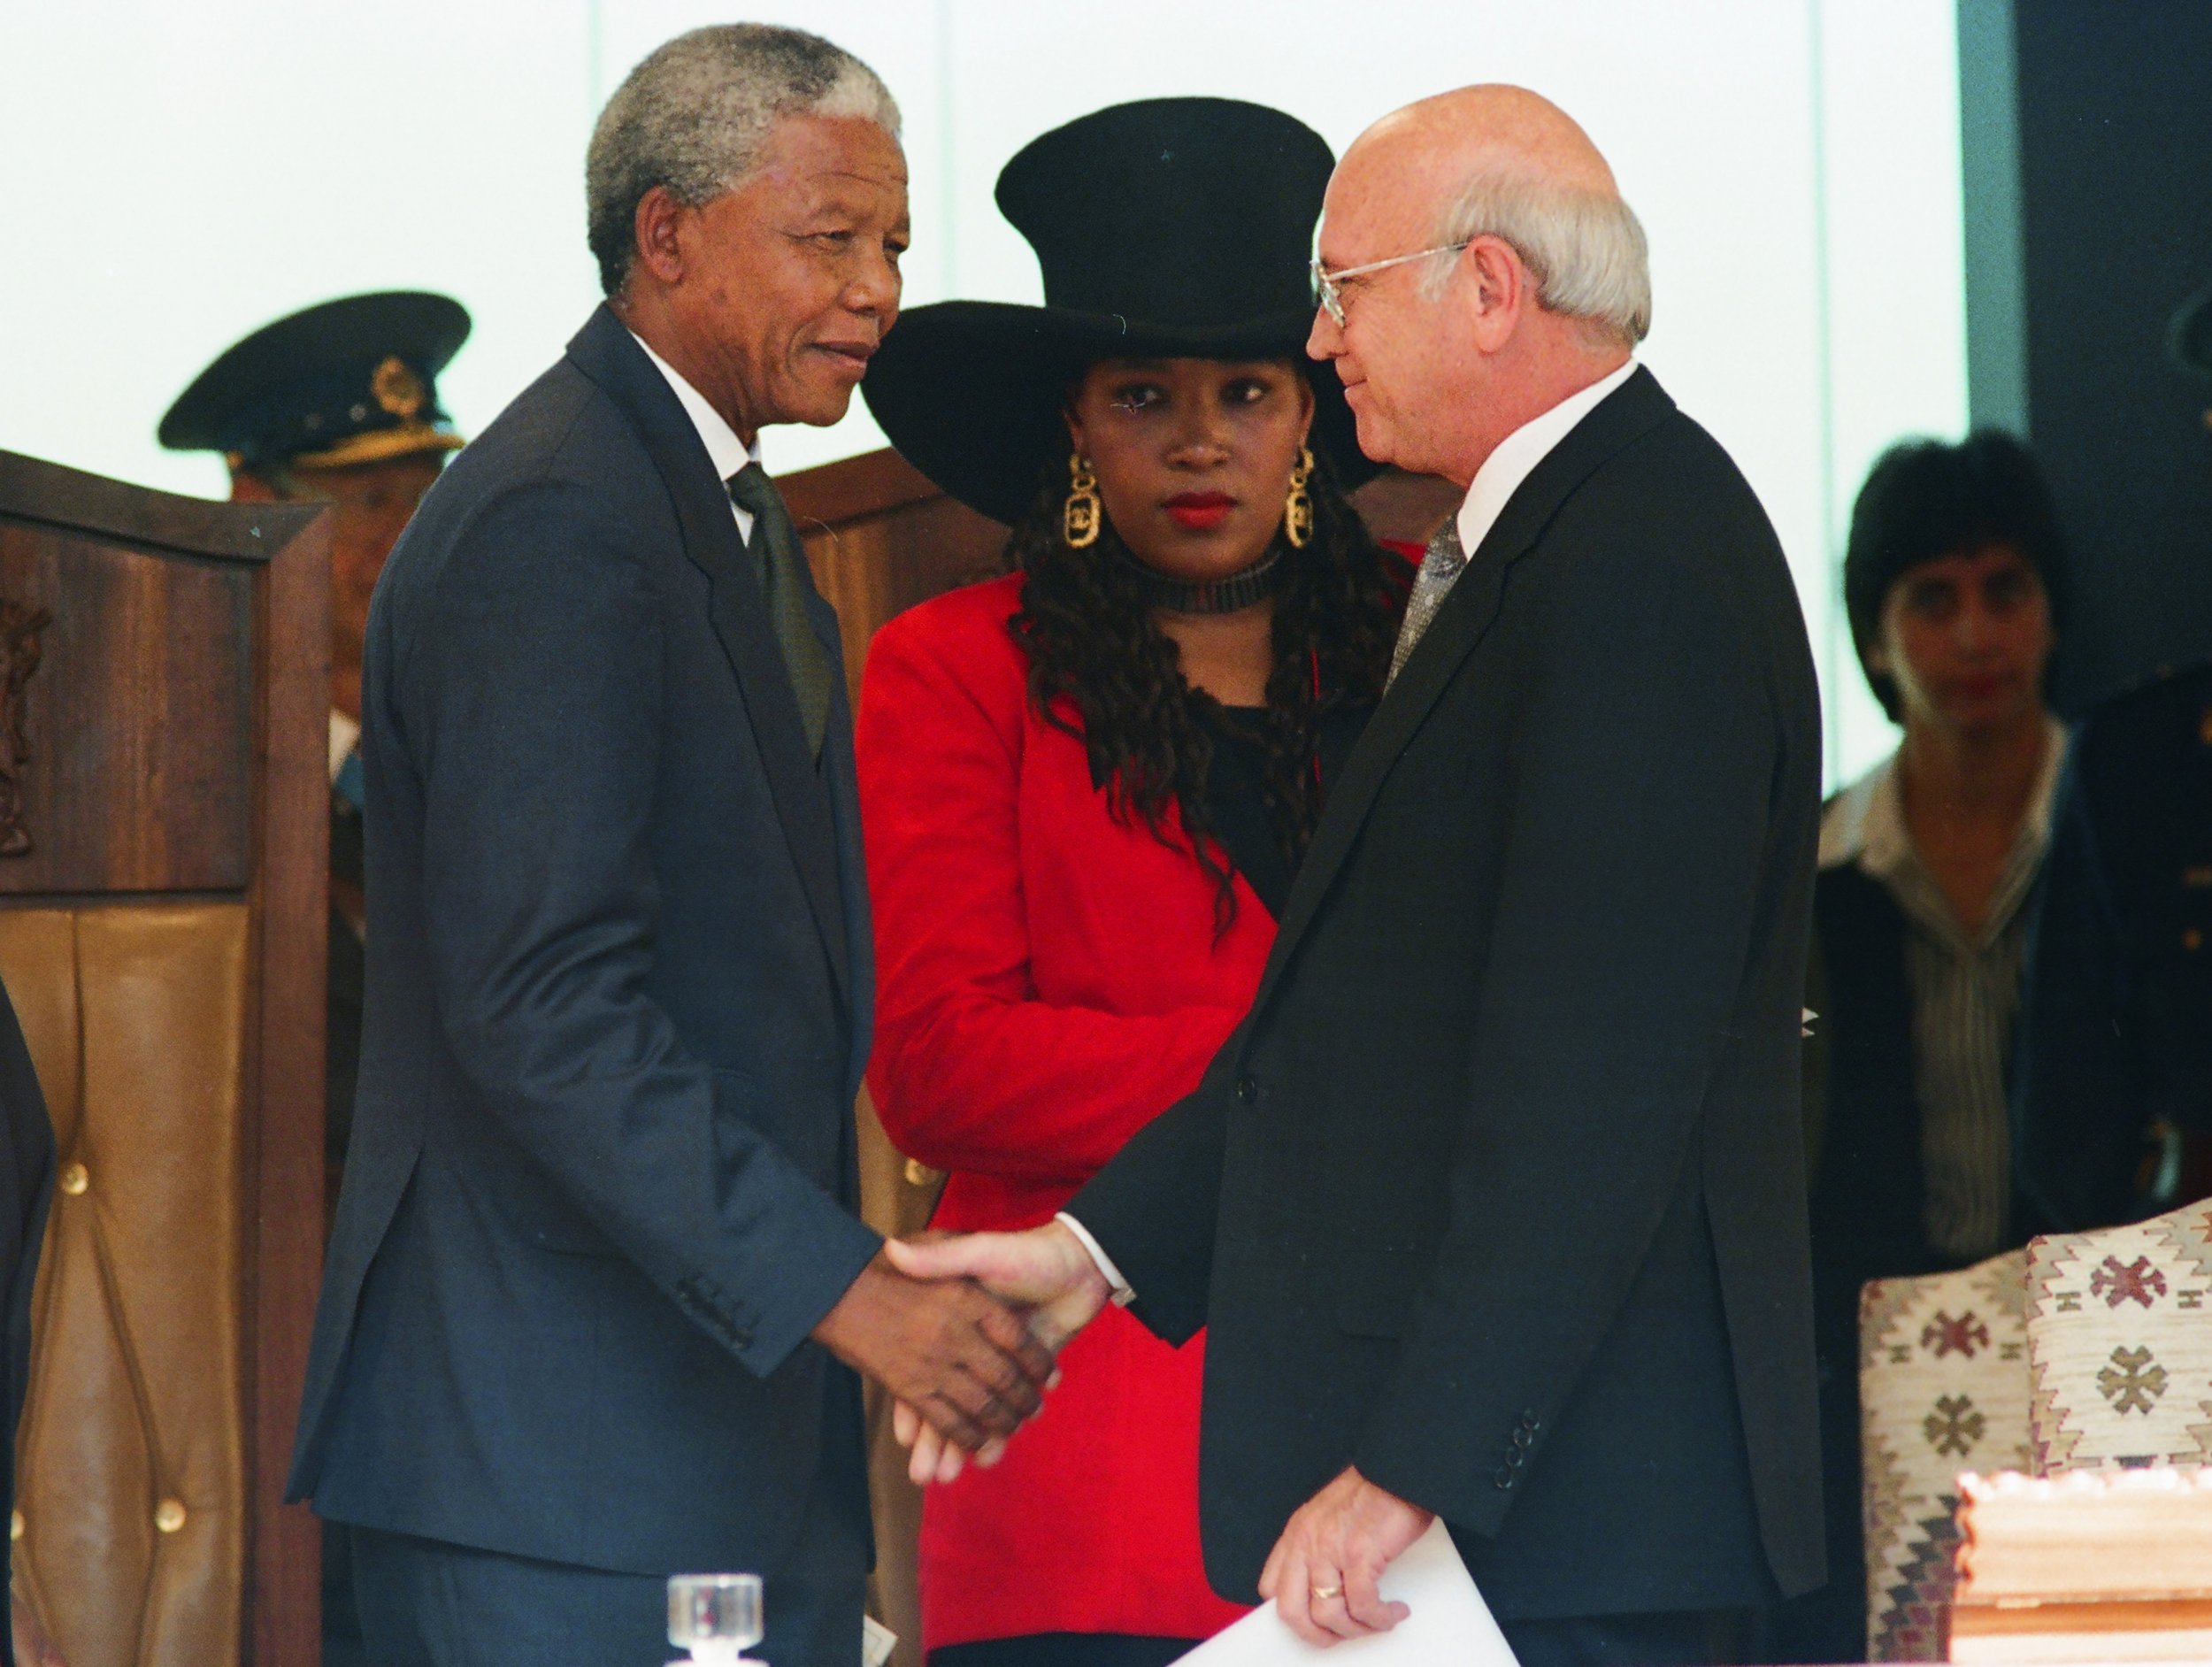 Mandela and de Klerk